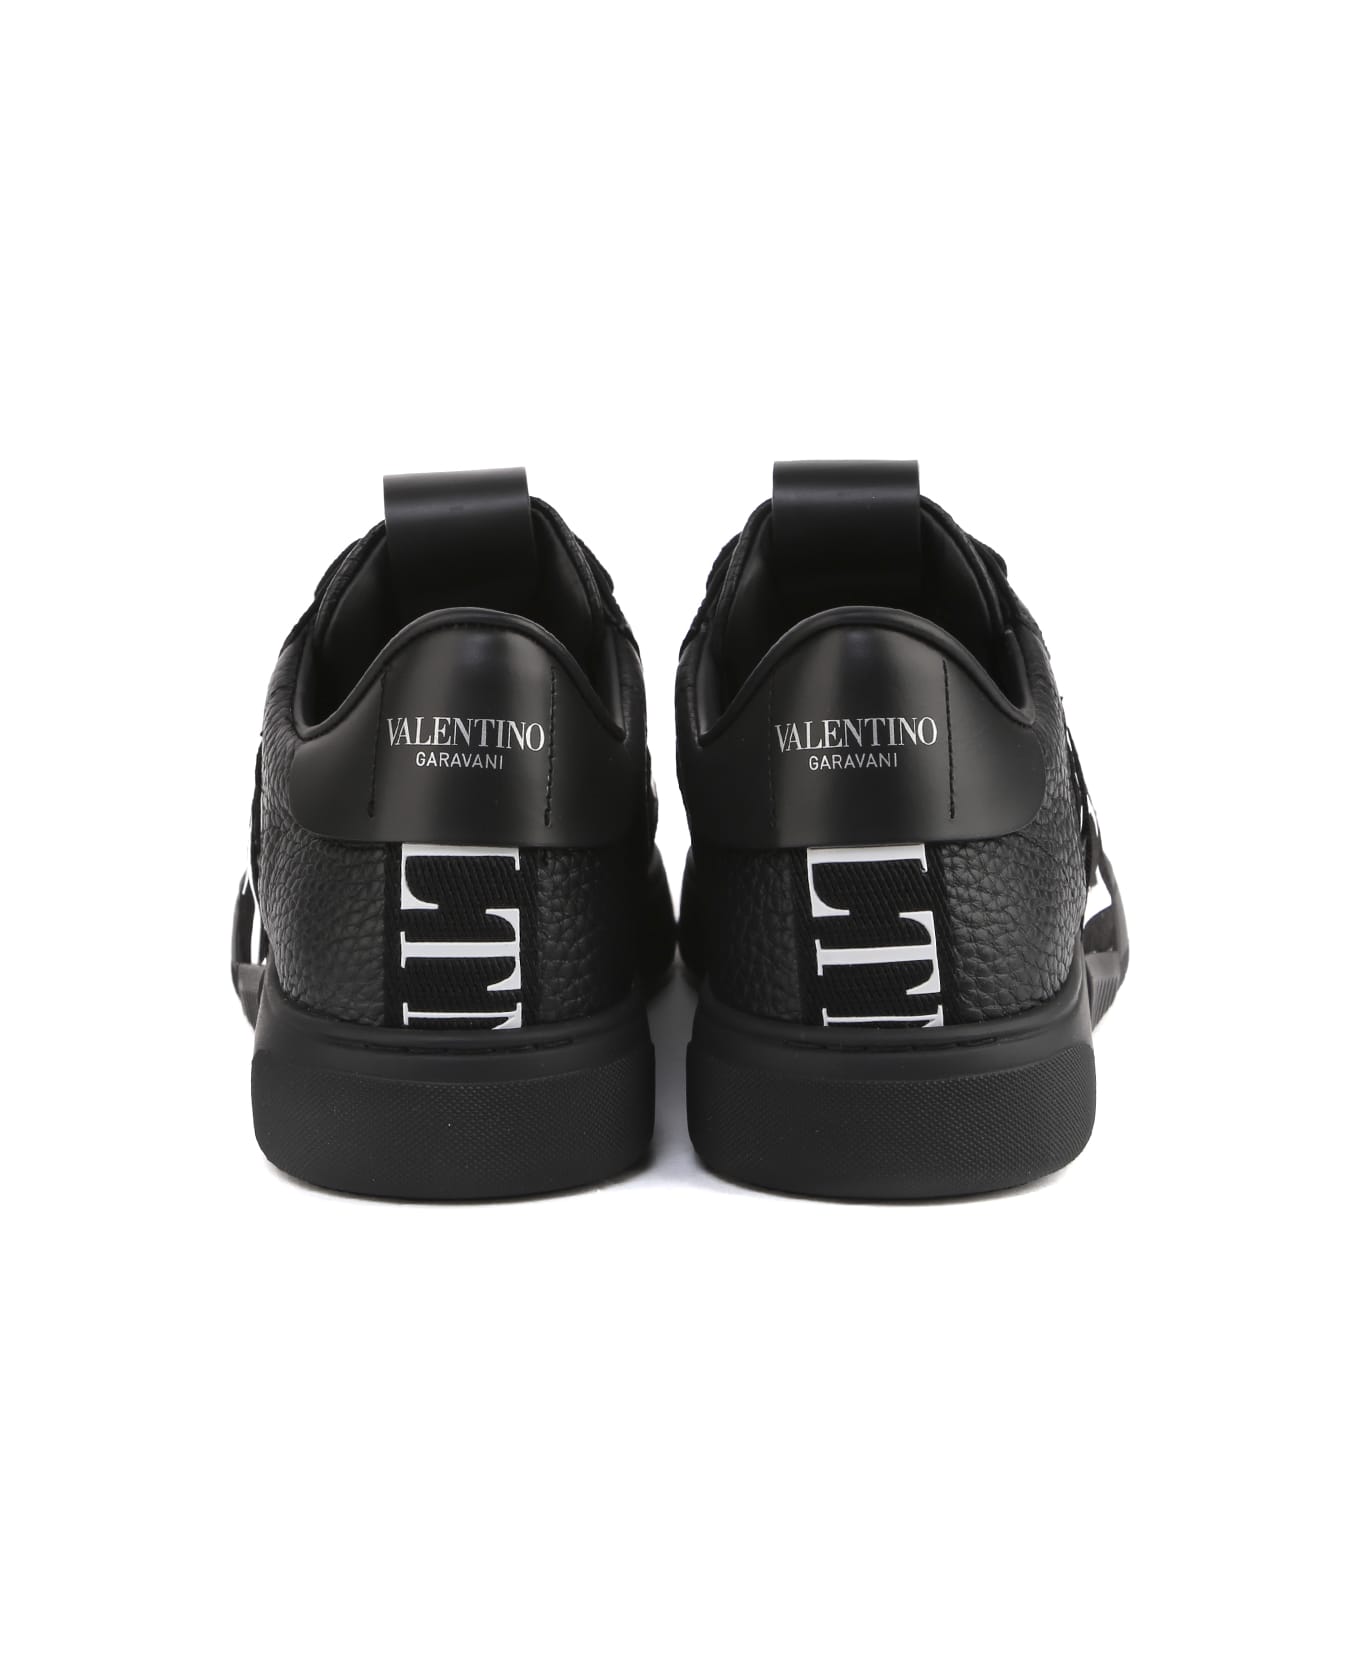 Valentino Garavani Vltn Leather Sneakers - Black/white